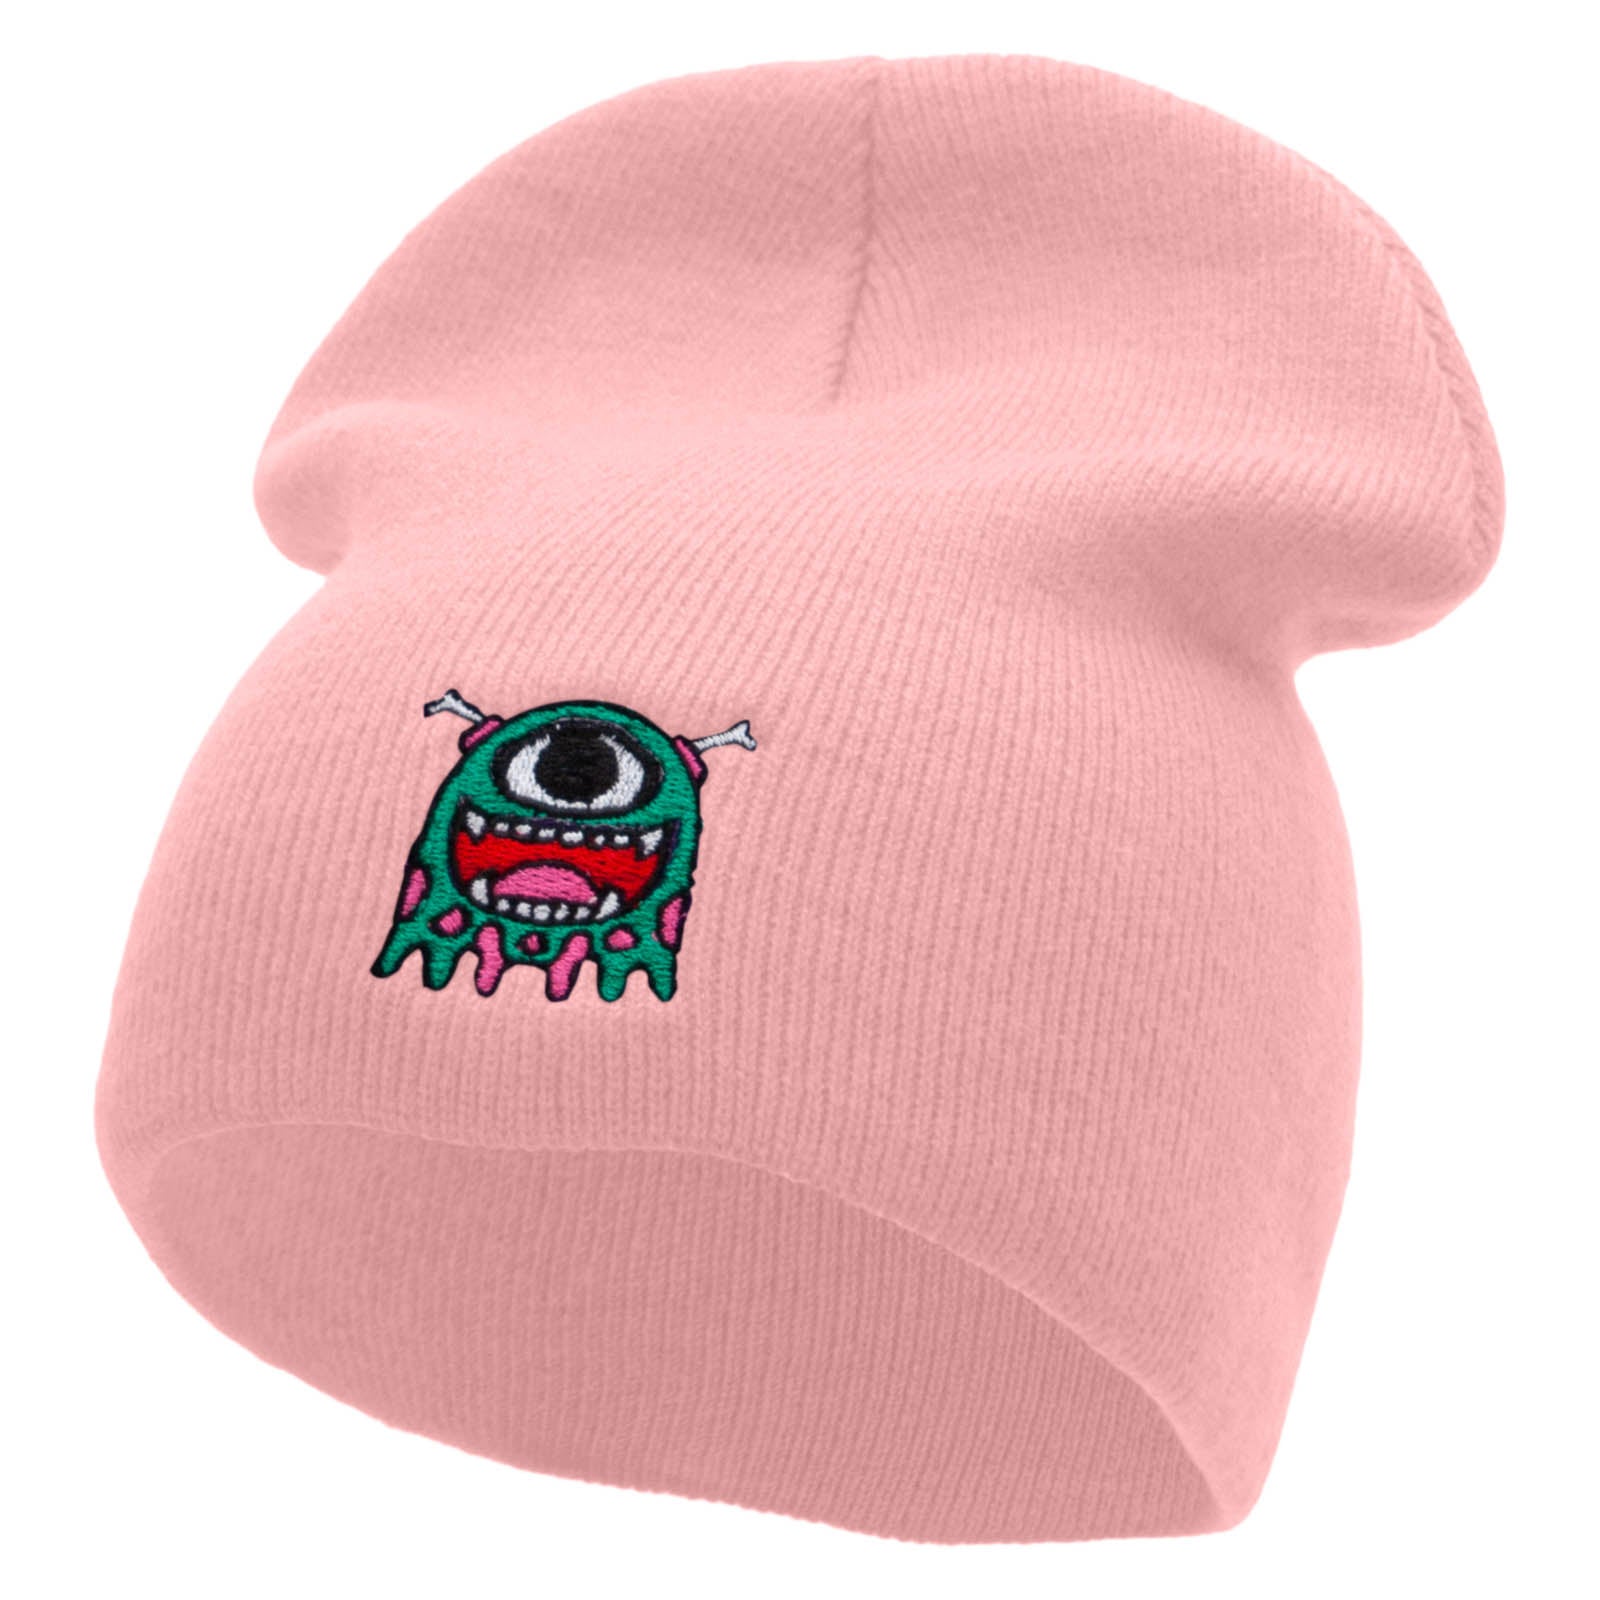 DND Monster Embroidered Short Beanie - Pink OSFM